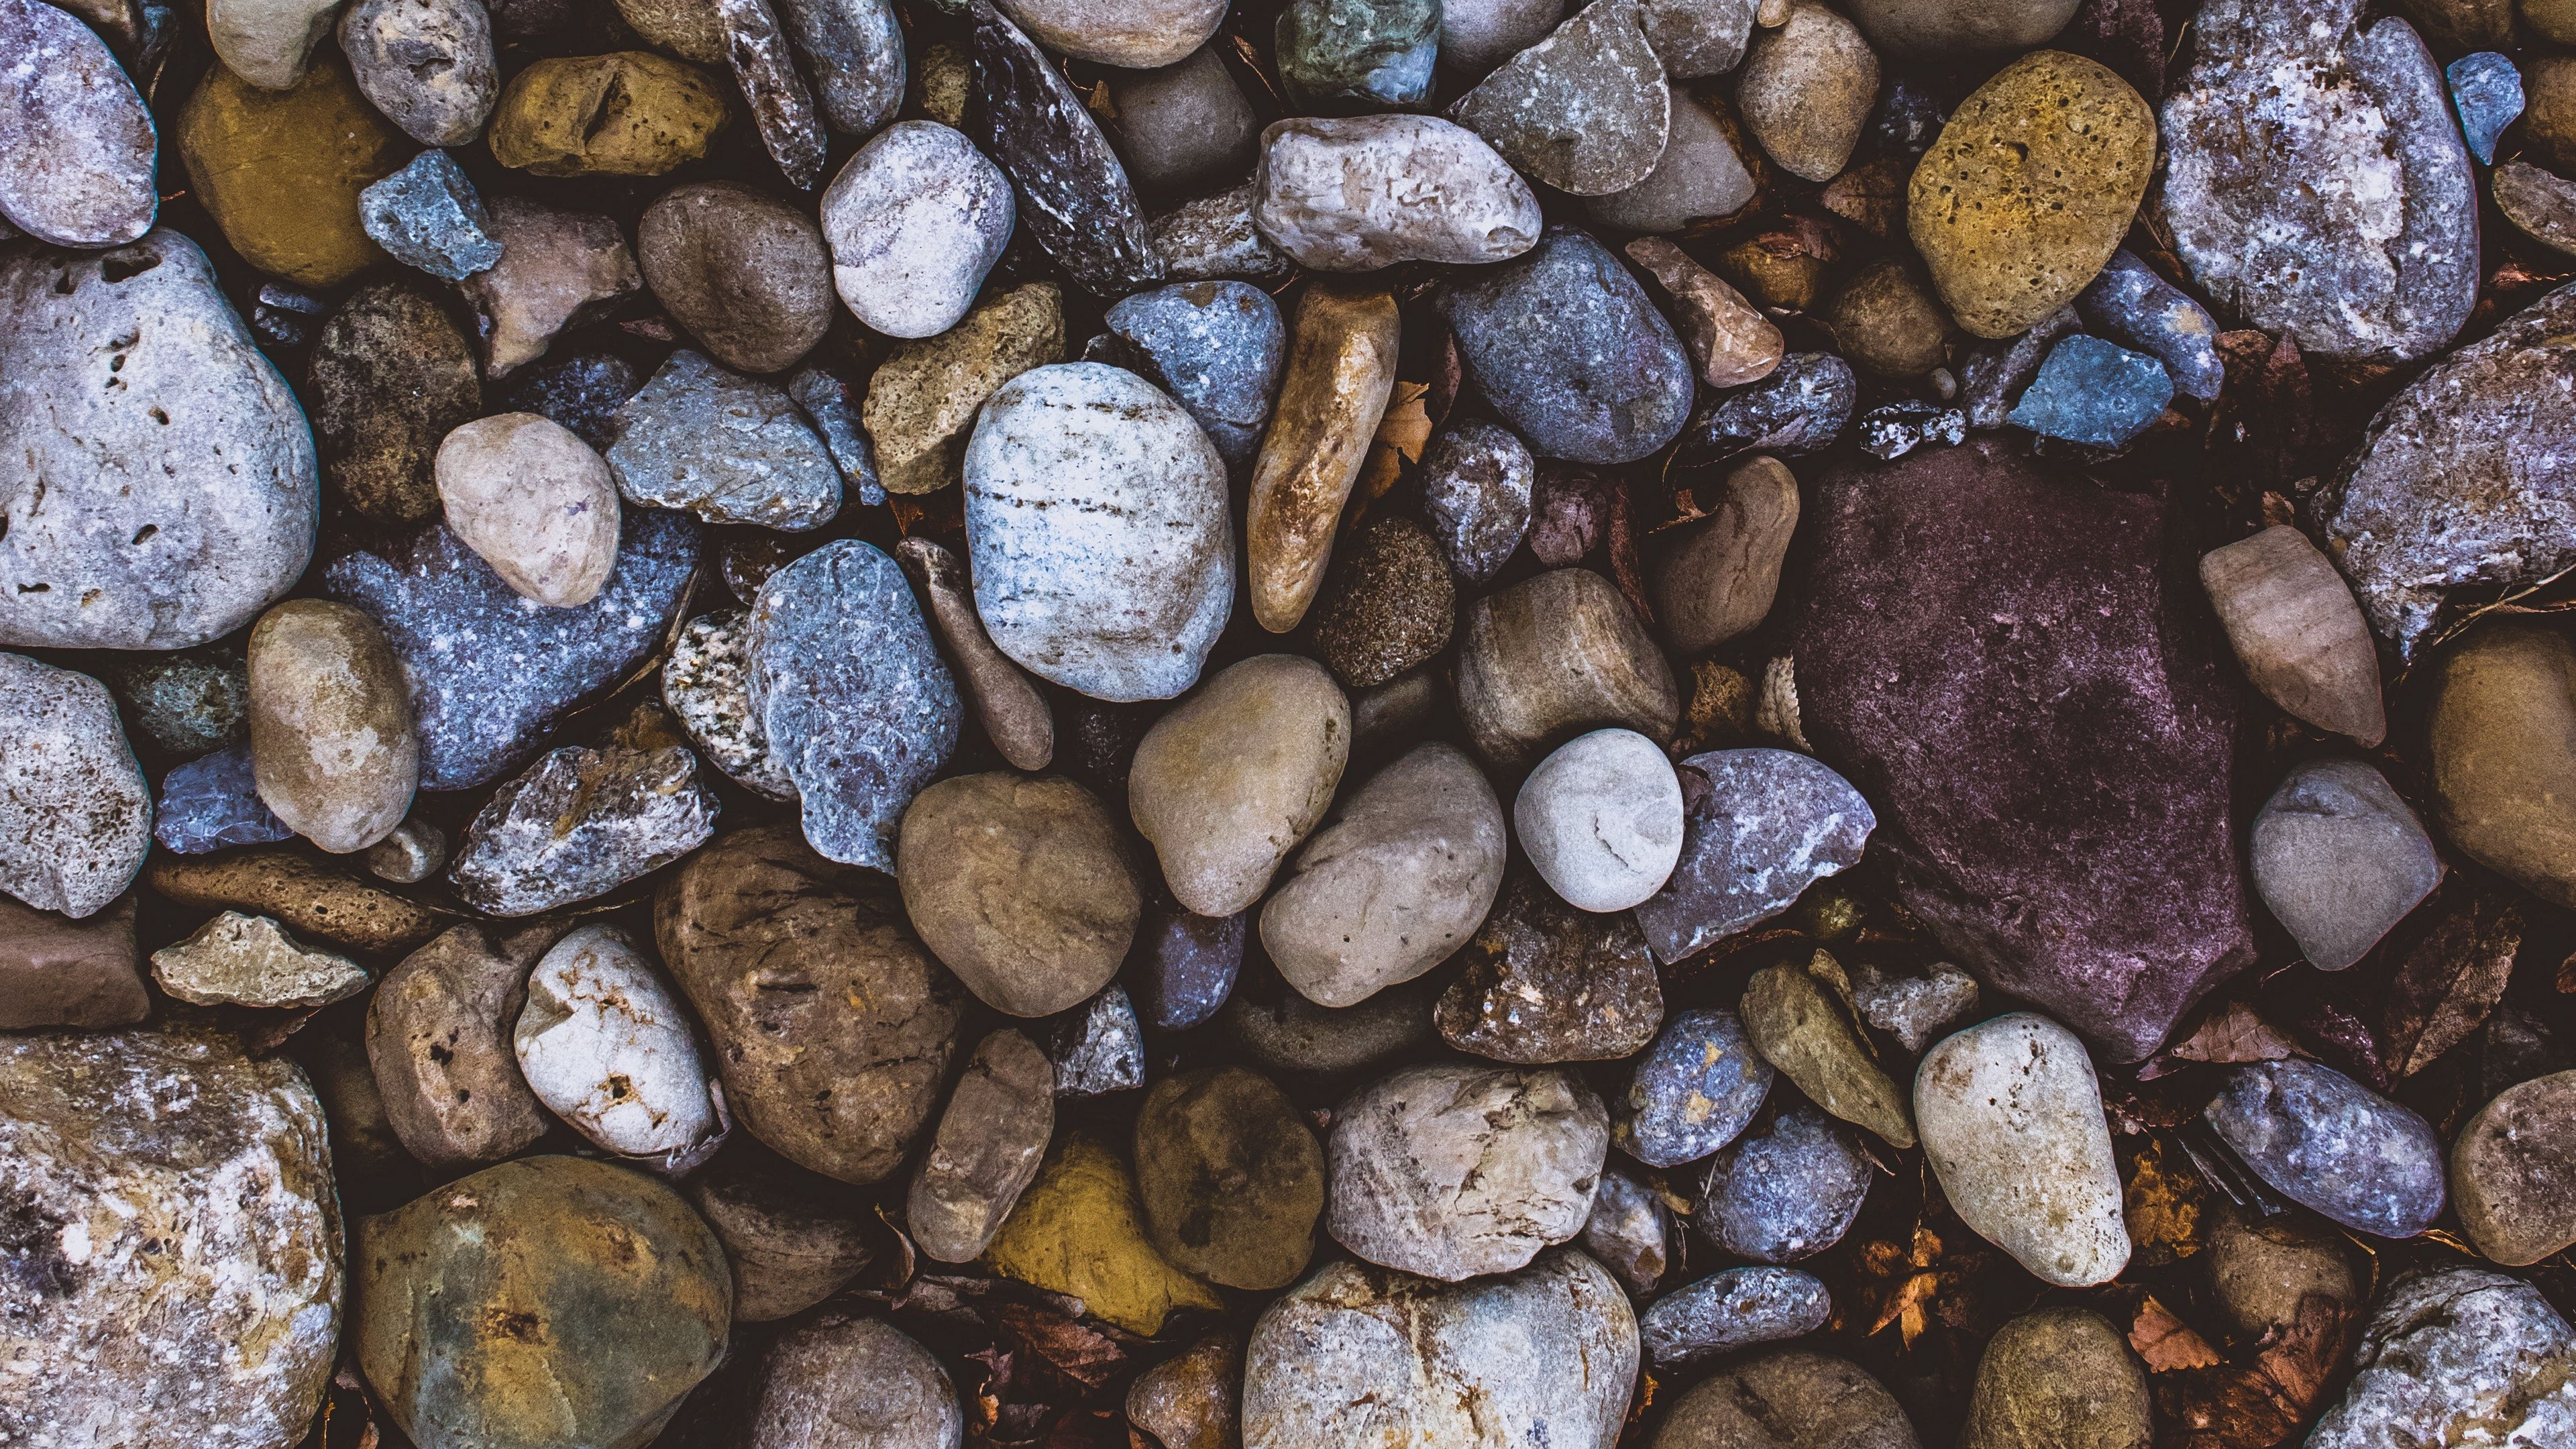 3840x2160 stones, sea, pebbles, forms 4k Stones, Sea, pebbles | Nature wallpaper, Pebbles, Stone